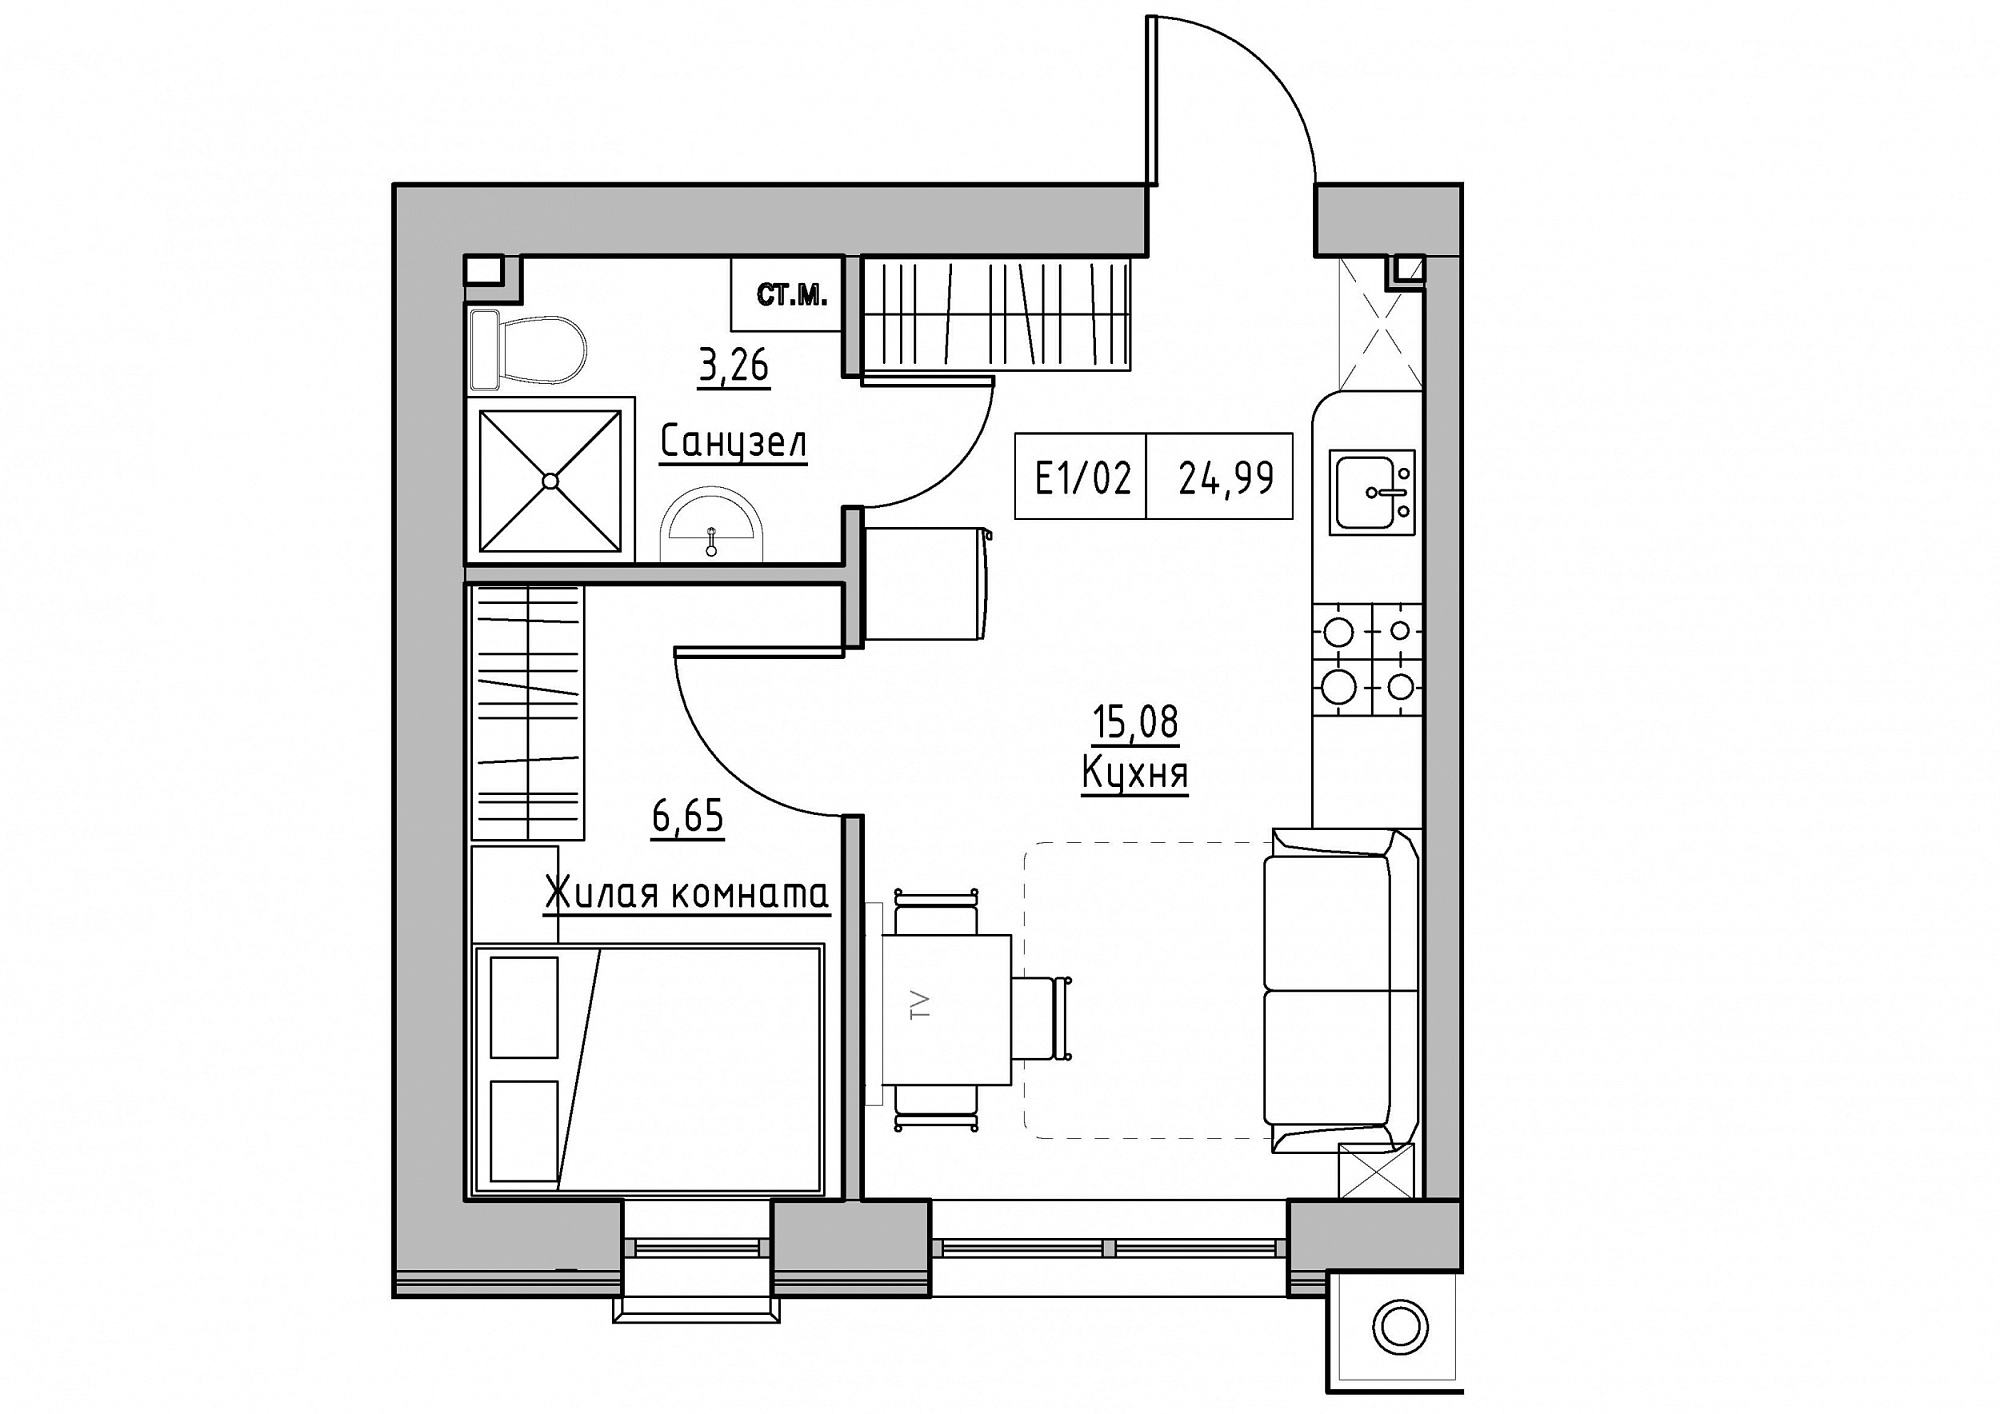 Planning 1-rm flats area 24.99m2, KS-011-02/0012.